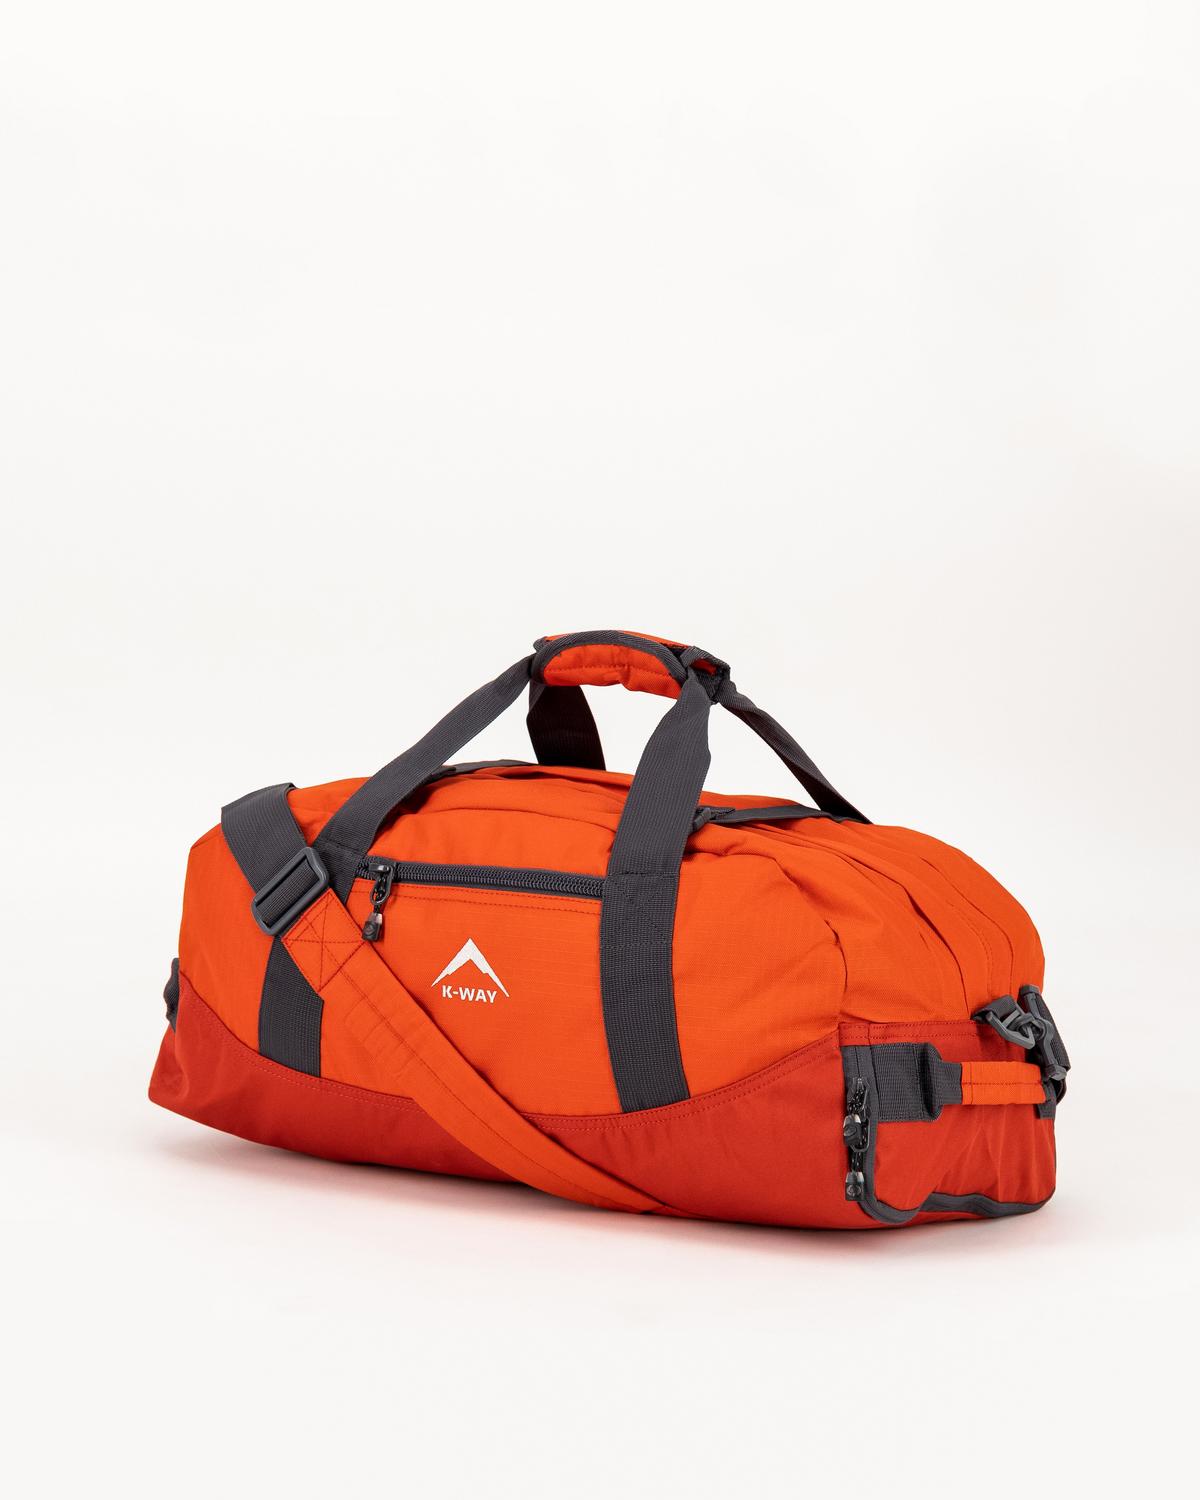 K-Way ECO EVO Small Gear Bag -  Red